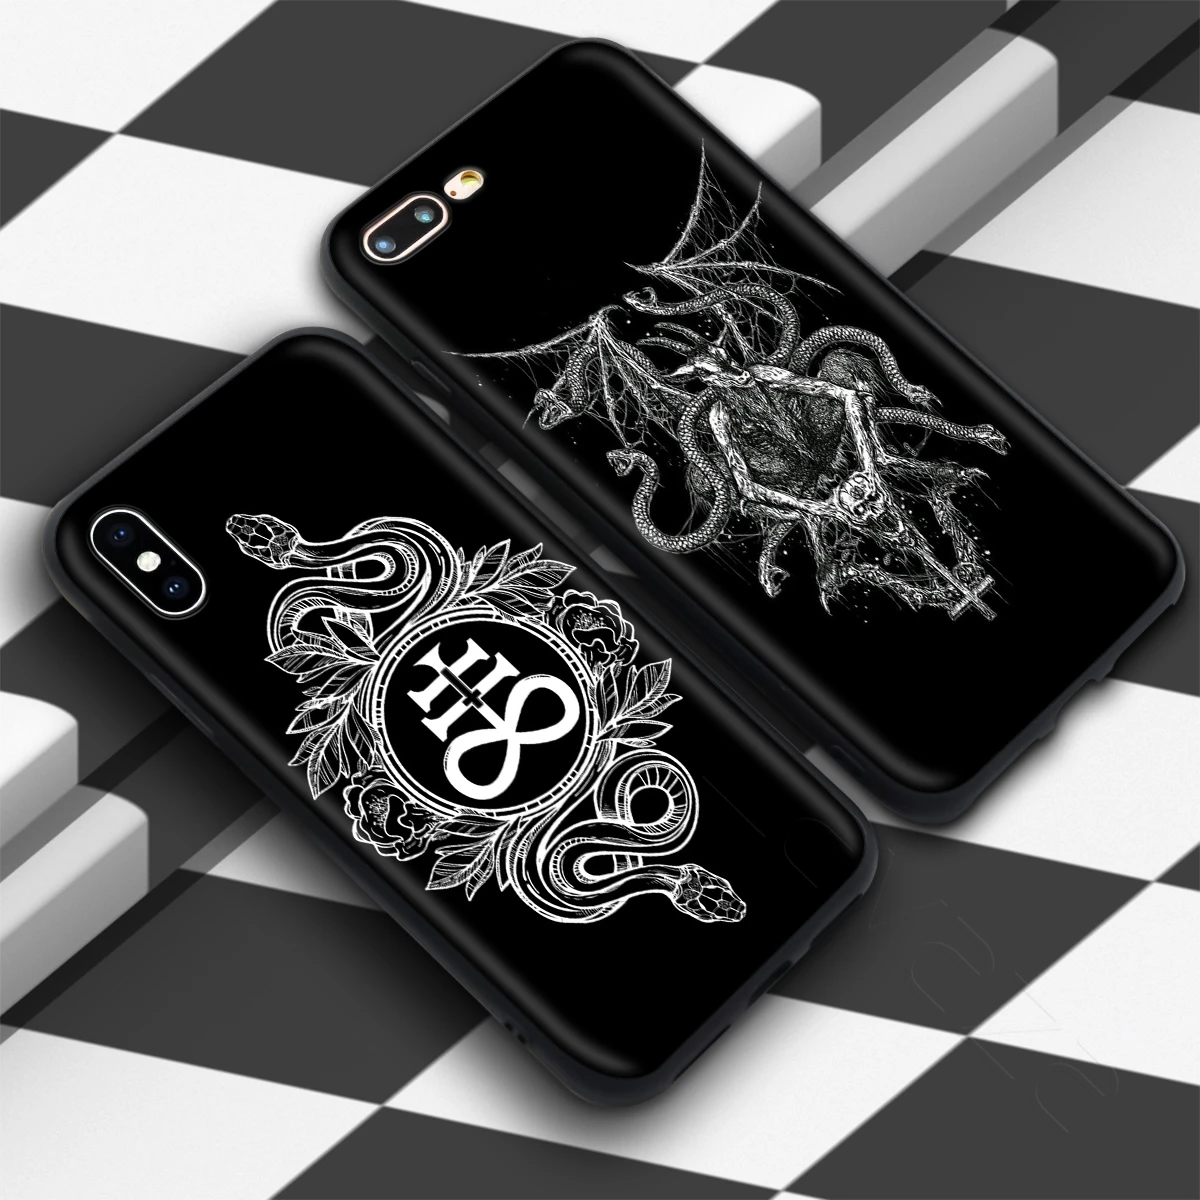 Чехол Lavaza Pentagram 666 Demonic Satanic для iPhone 11 Pro XS Max XR X 8 7 6 6S Plus 5 5S se